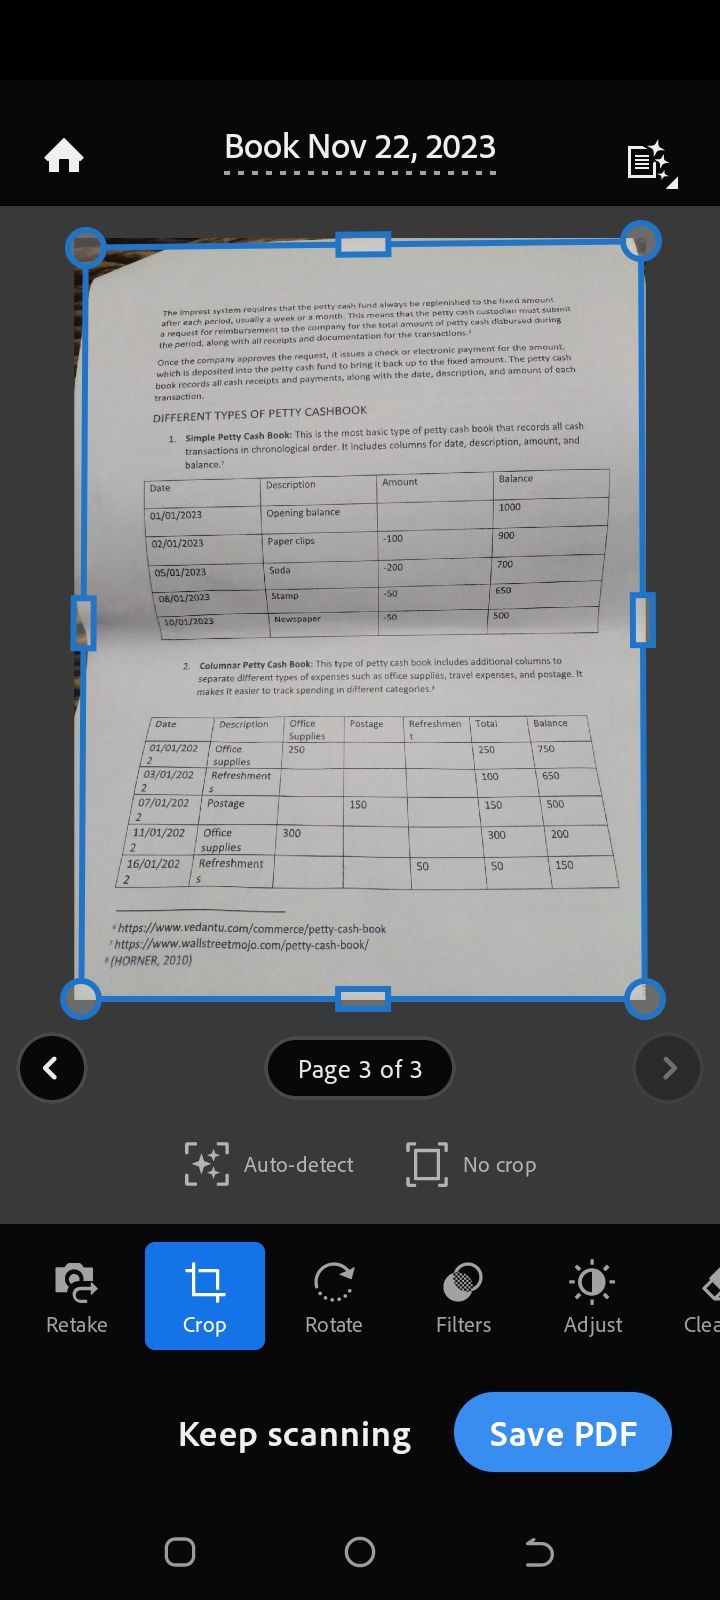 Adobe Scan app scanning a document 